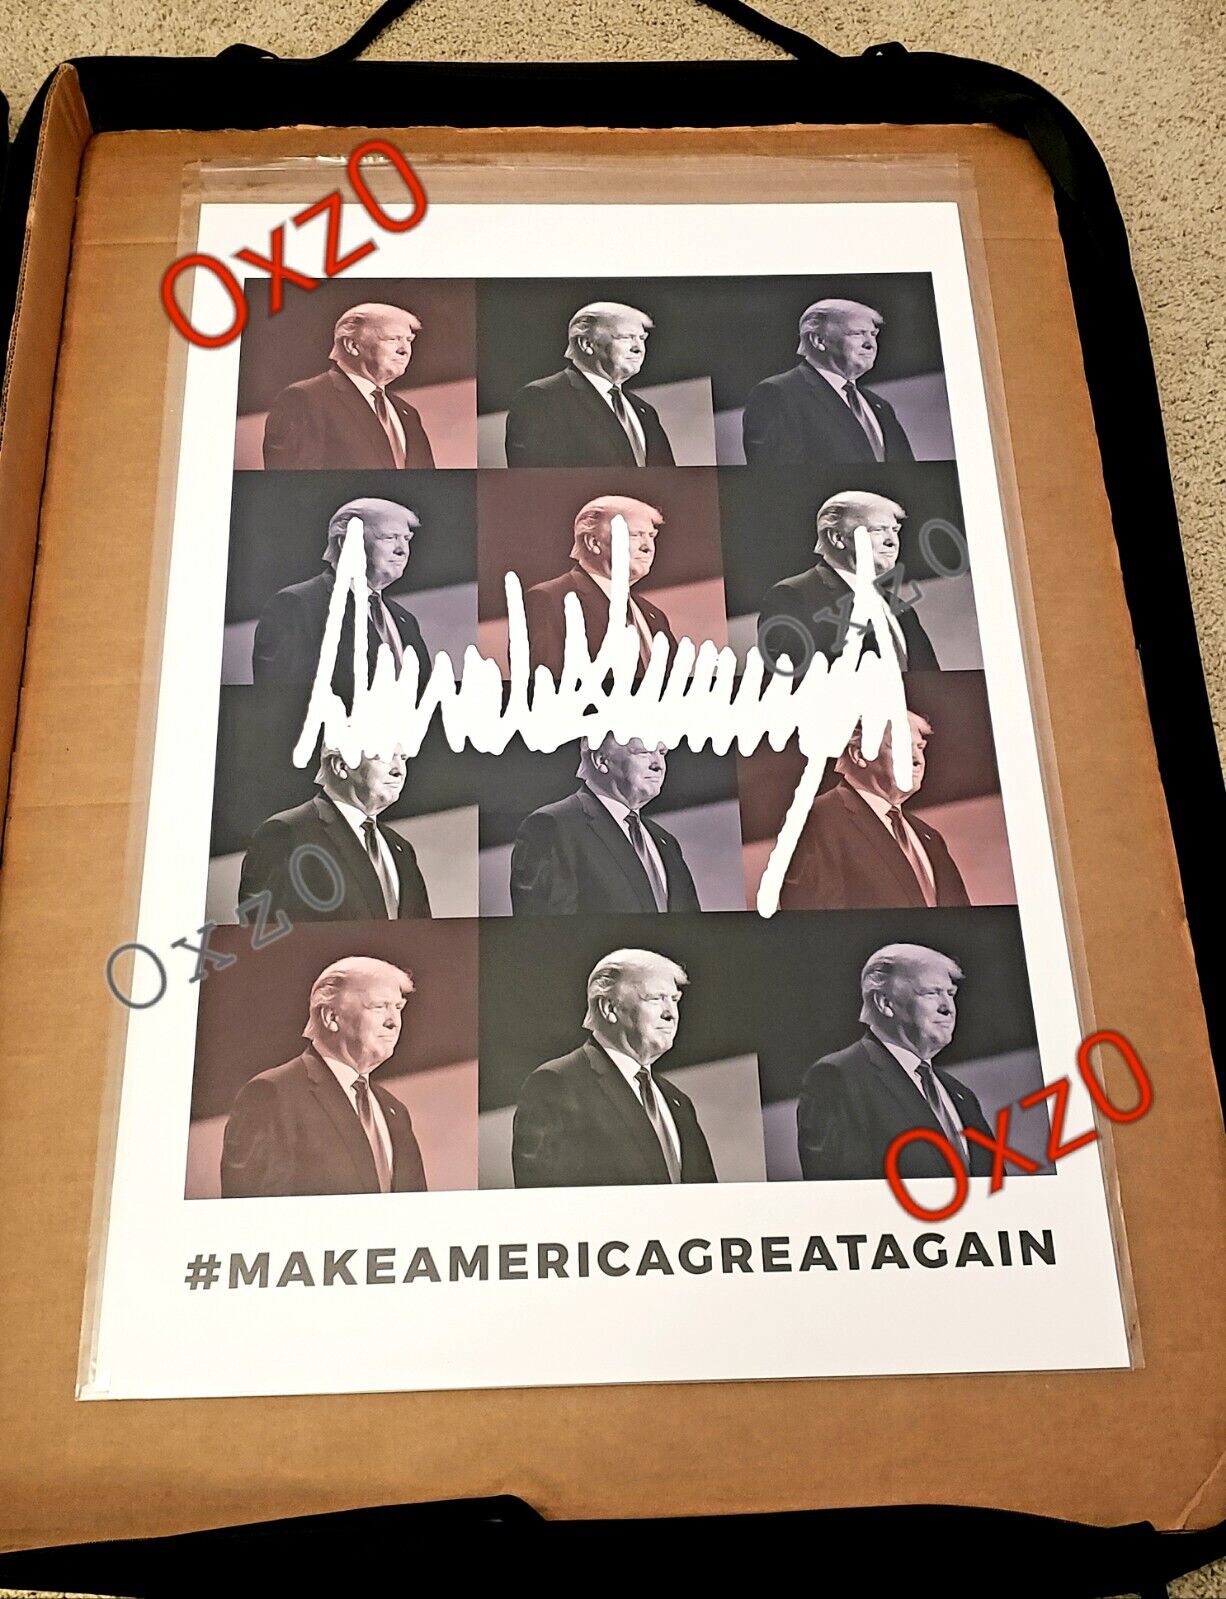 Official 2016 Donald Trump Signed Make America Great Again Art Print Poster MAGA